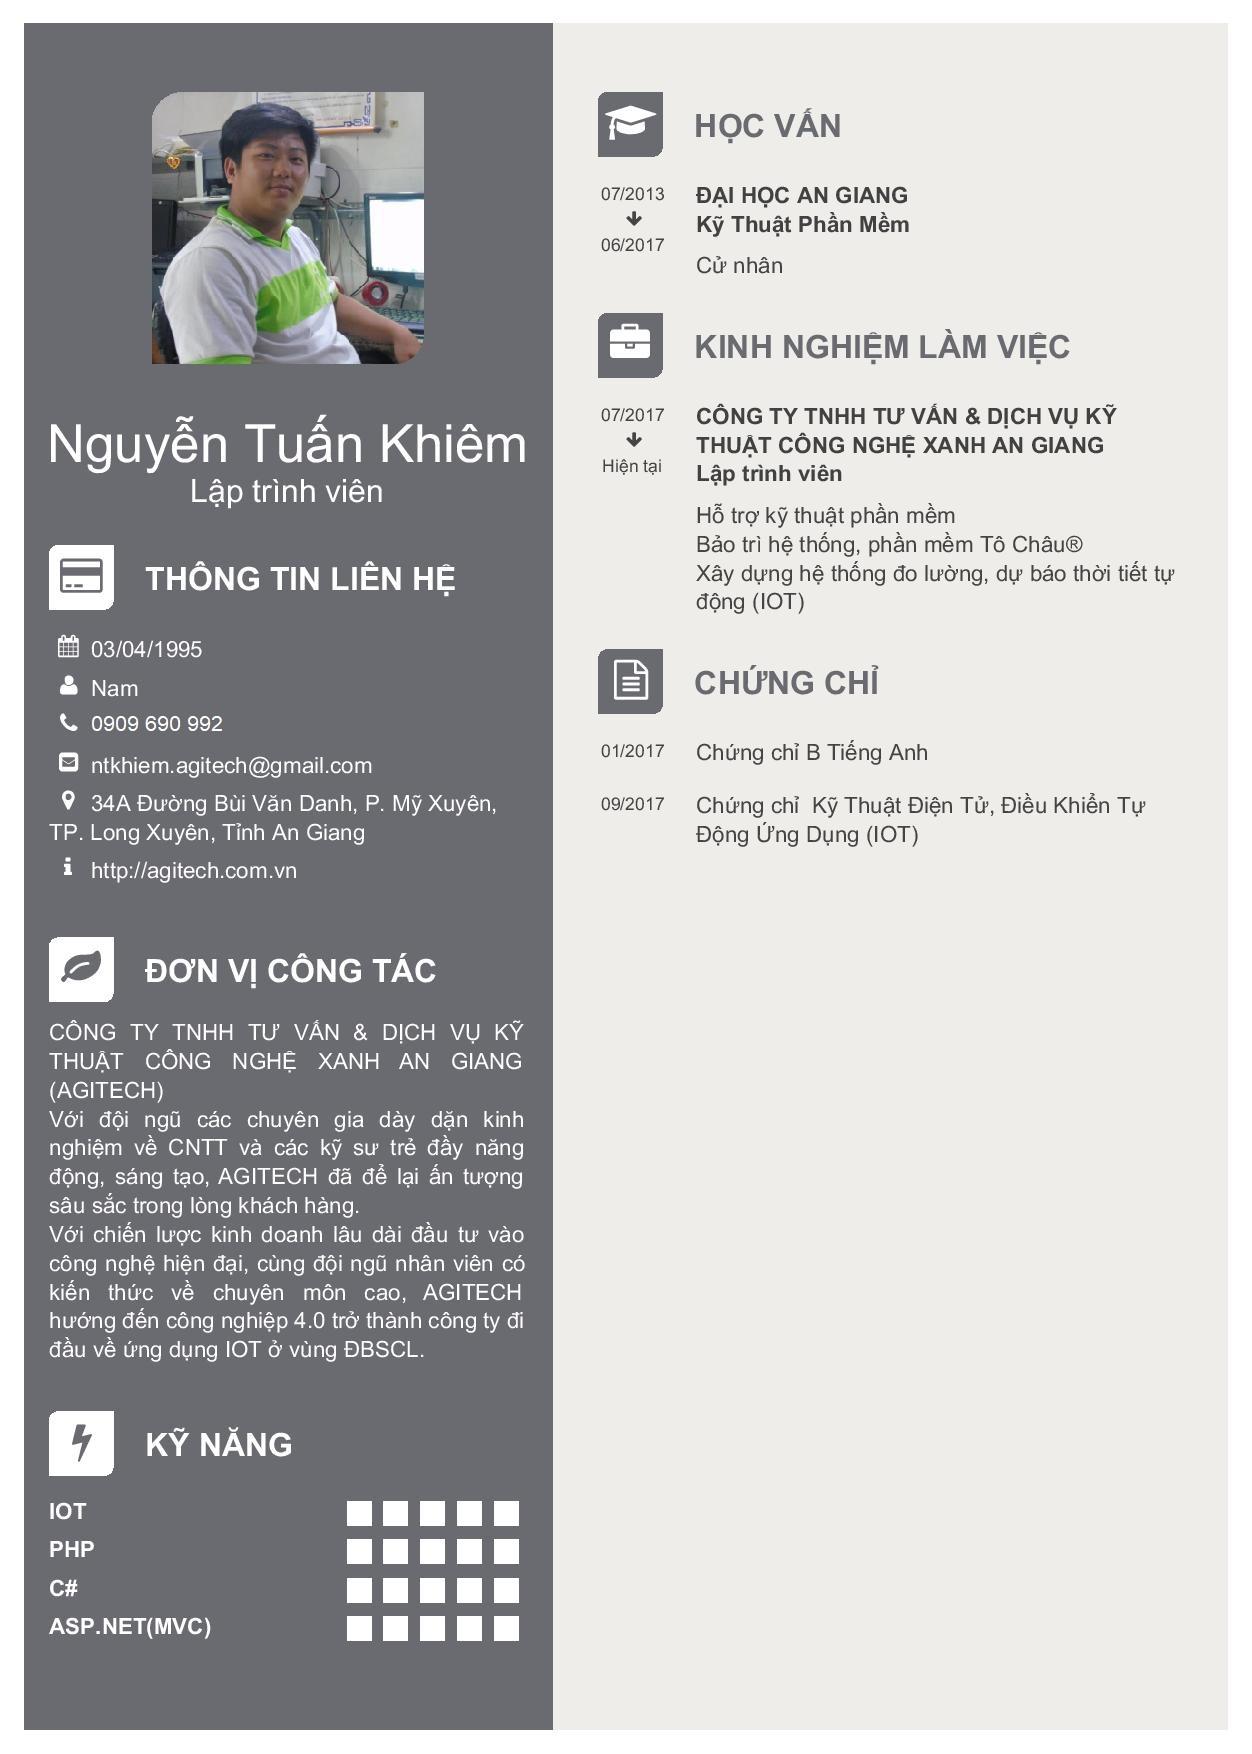 Nguyen Tuan Khiem CV 1